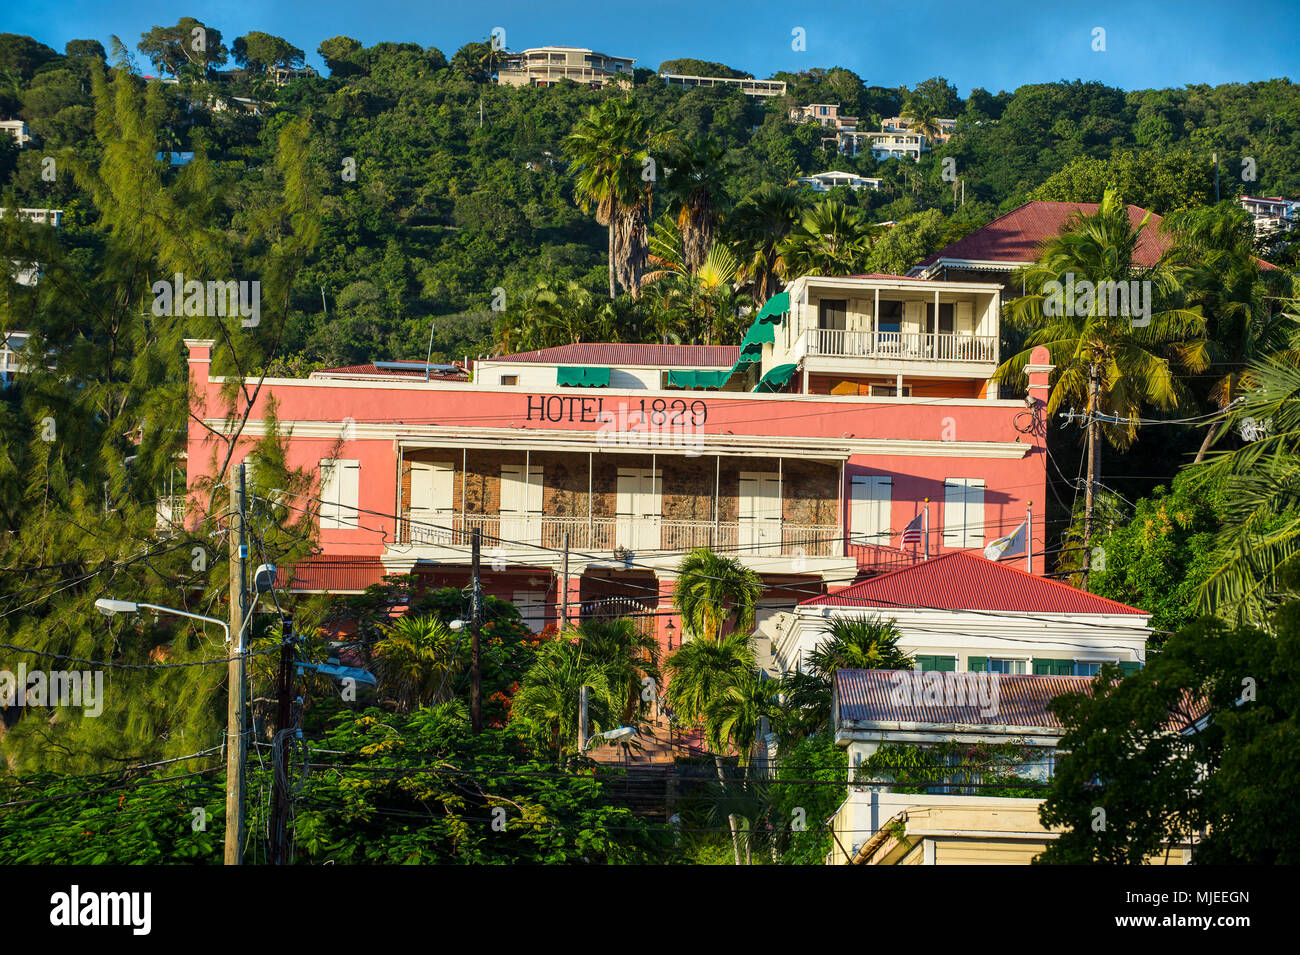 Hotel histórico de 1929, Charlotte Amalie capital de St. Thomas, Islas Vírgenes de EE.UU. Foto de stock